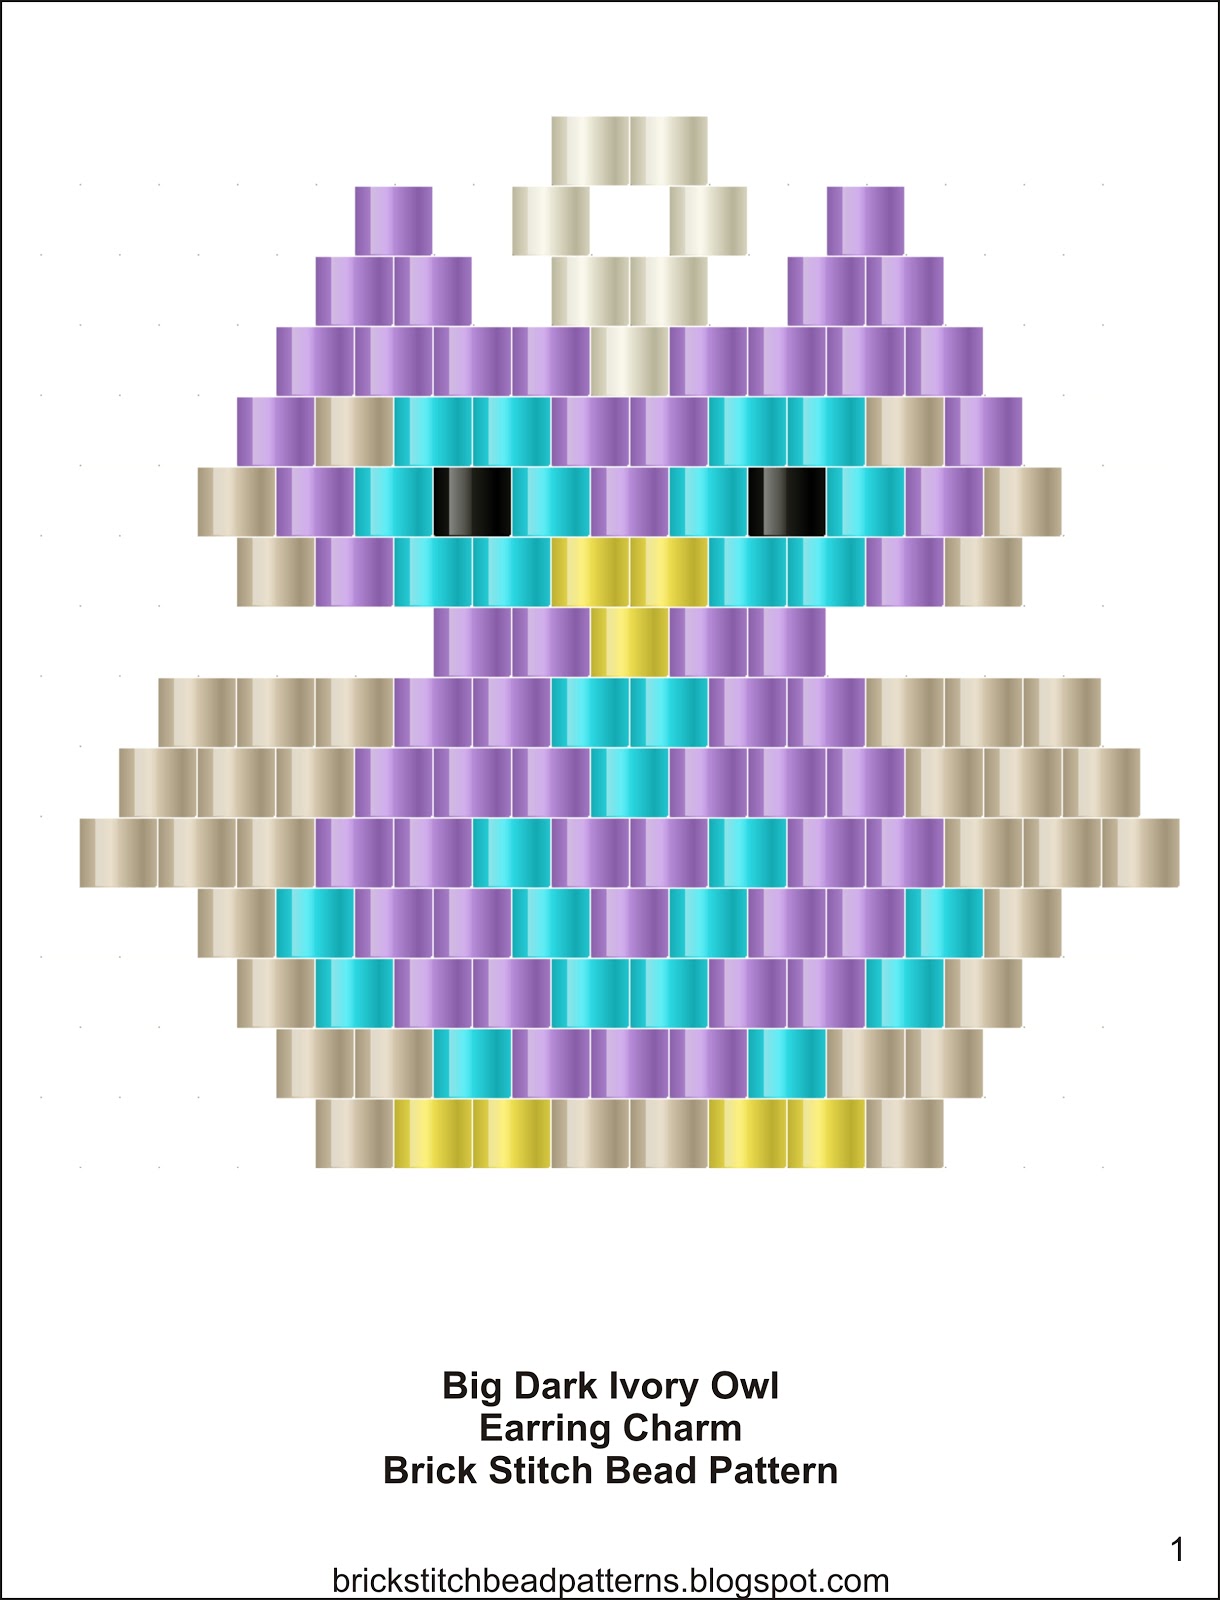 Download Brick Stitch Bead Patterns Journal: Big Dark Ivory Owl Brick Stitch Beaded Earring Charm